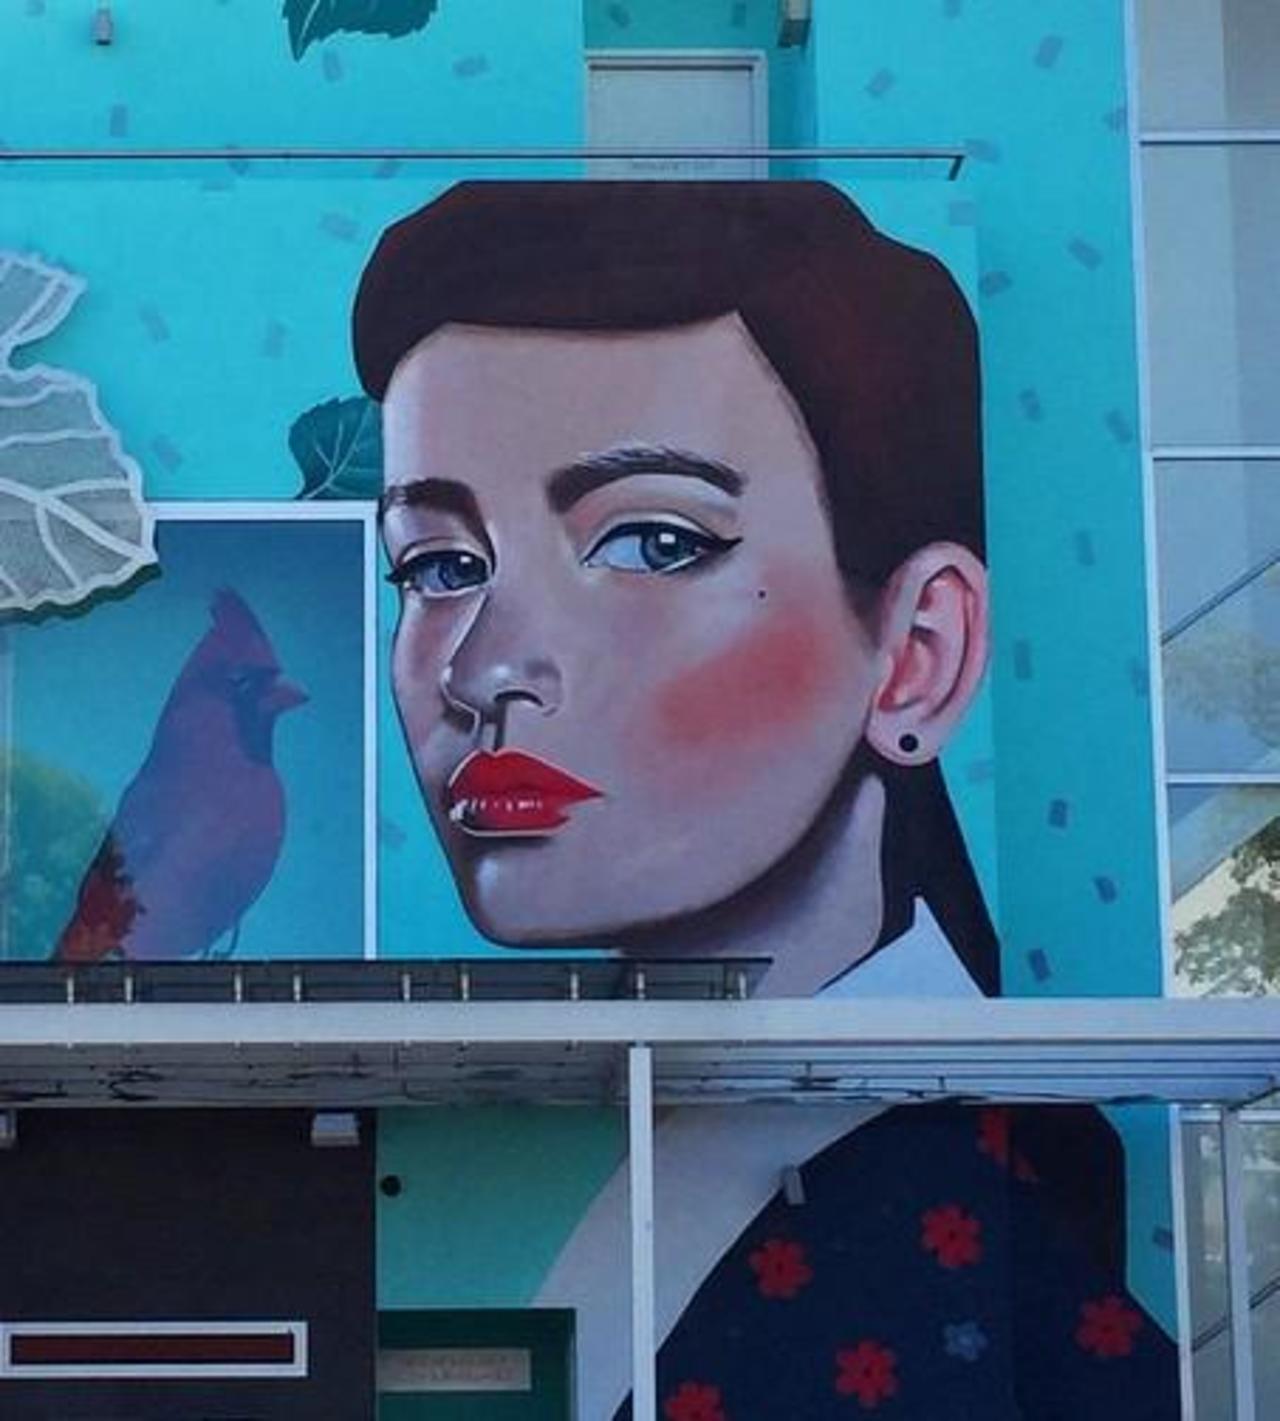 Superb large scale Street Art portraiture by Lisa King in Adelaide

#art #arte #graffiti #streetart http://t.co/N6rAOxTLm6